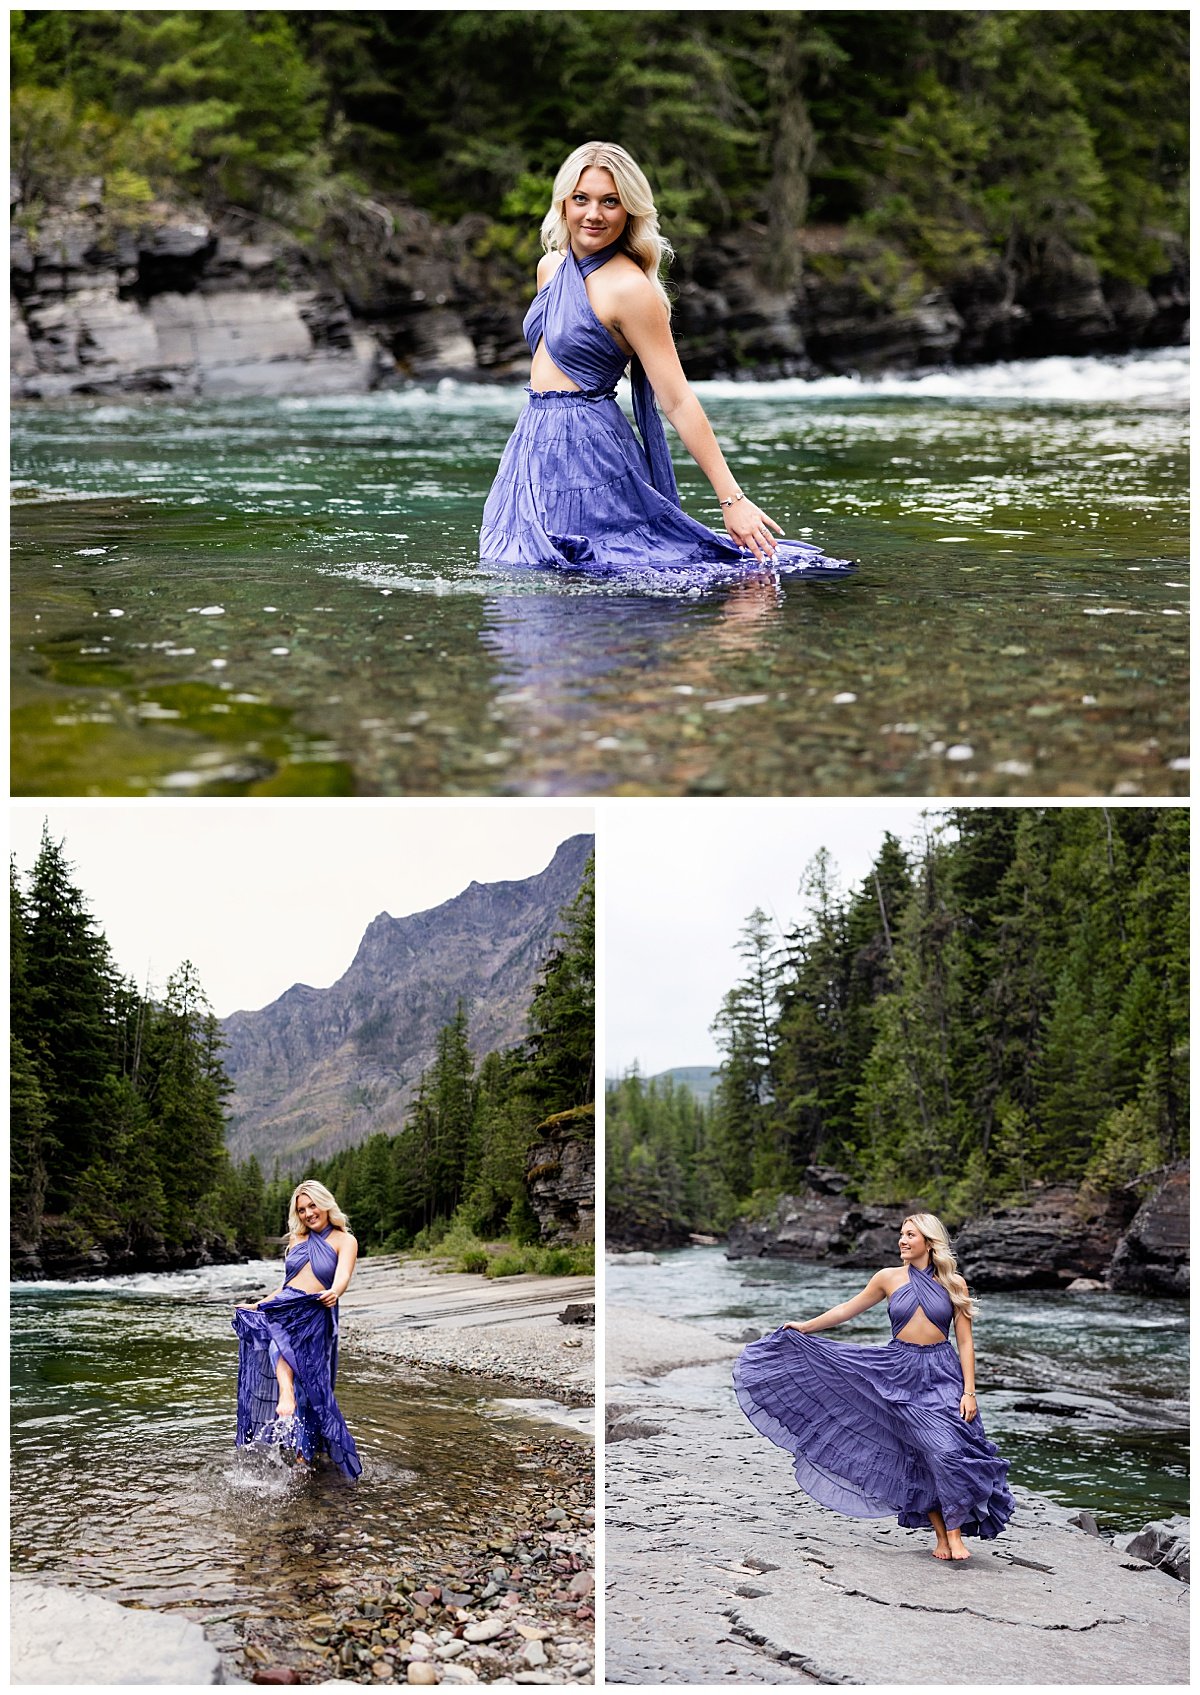 Senior girl in the water at Glacier National Park.